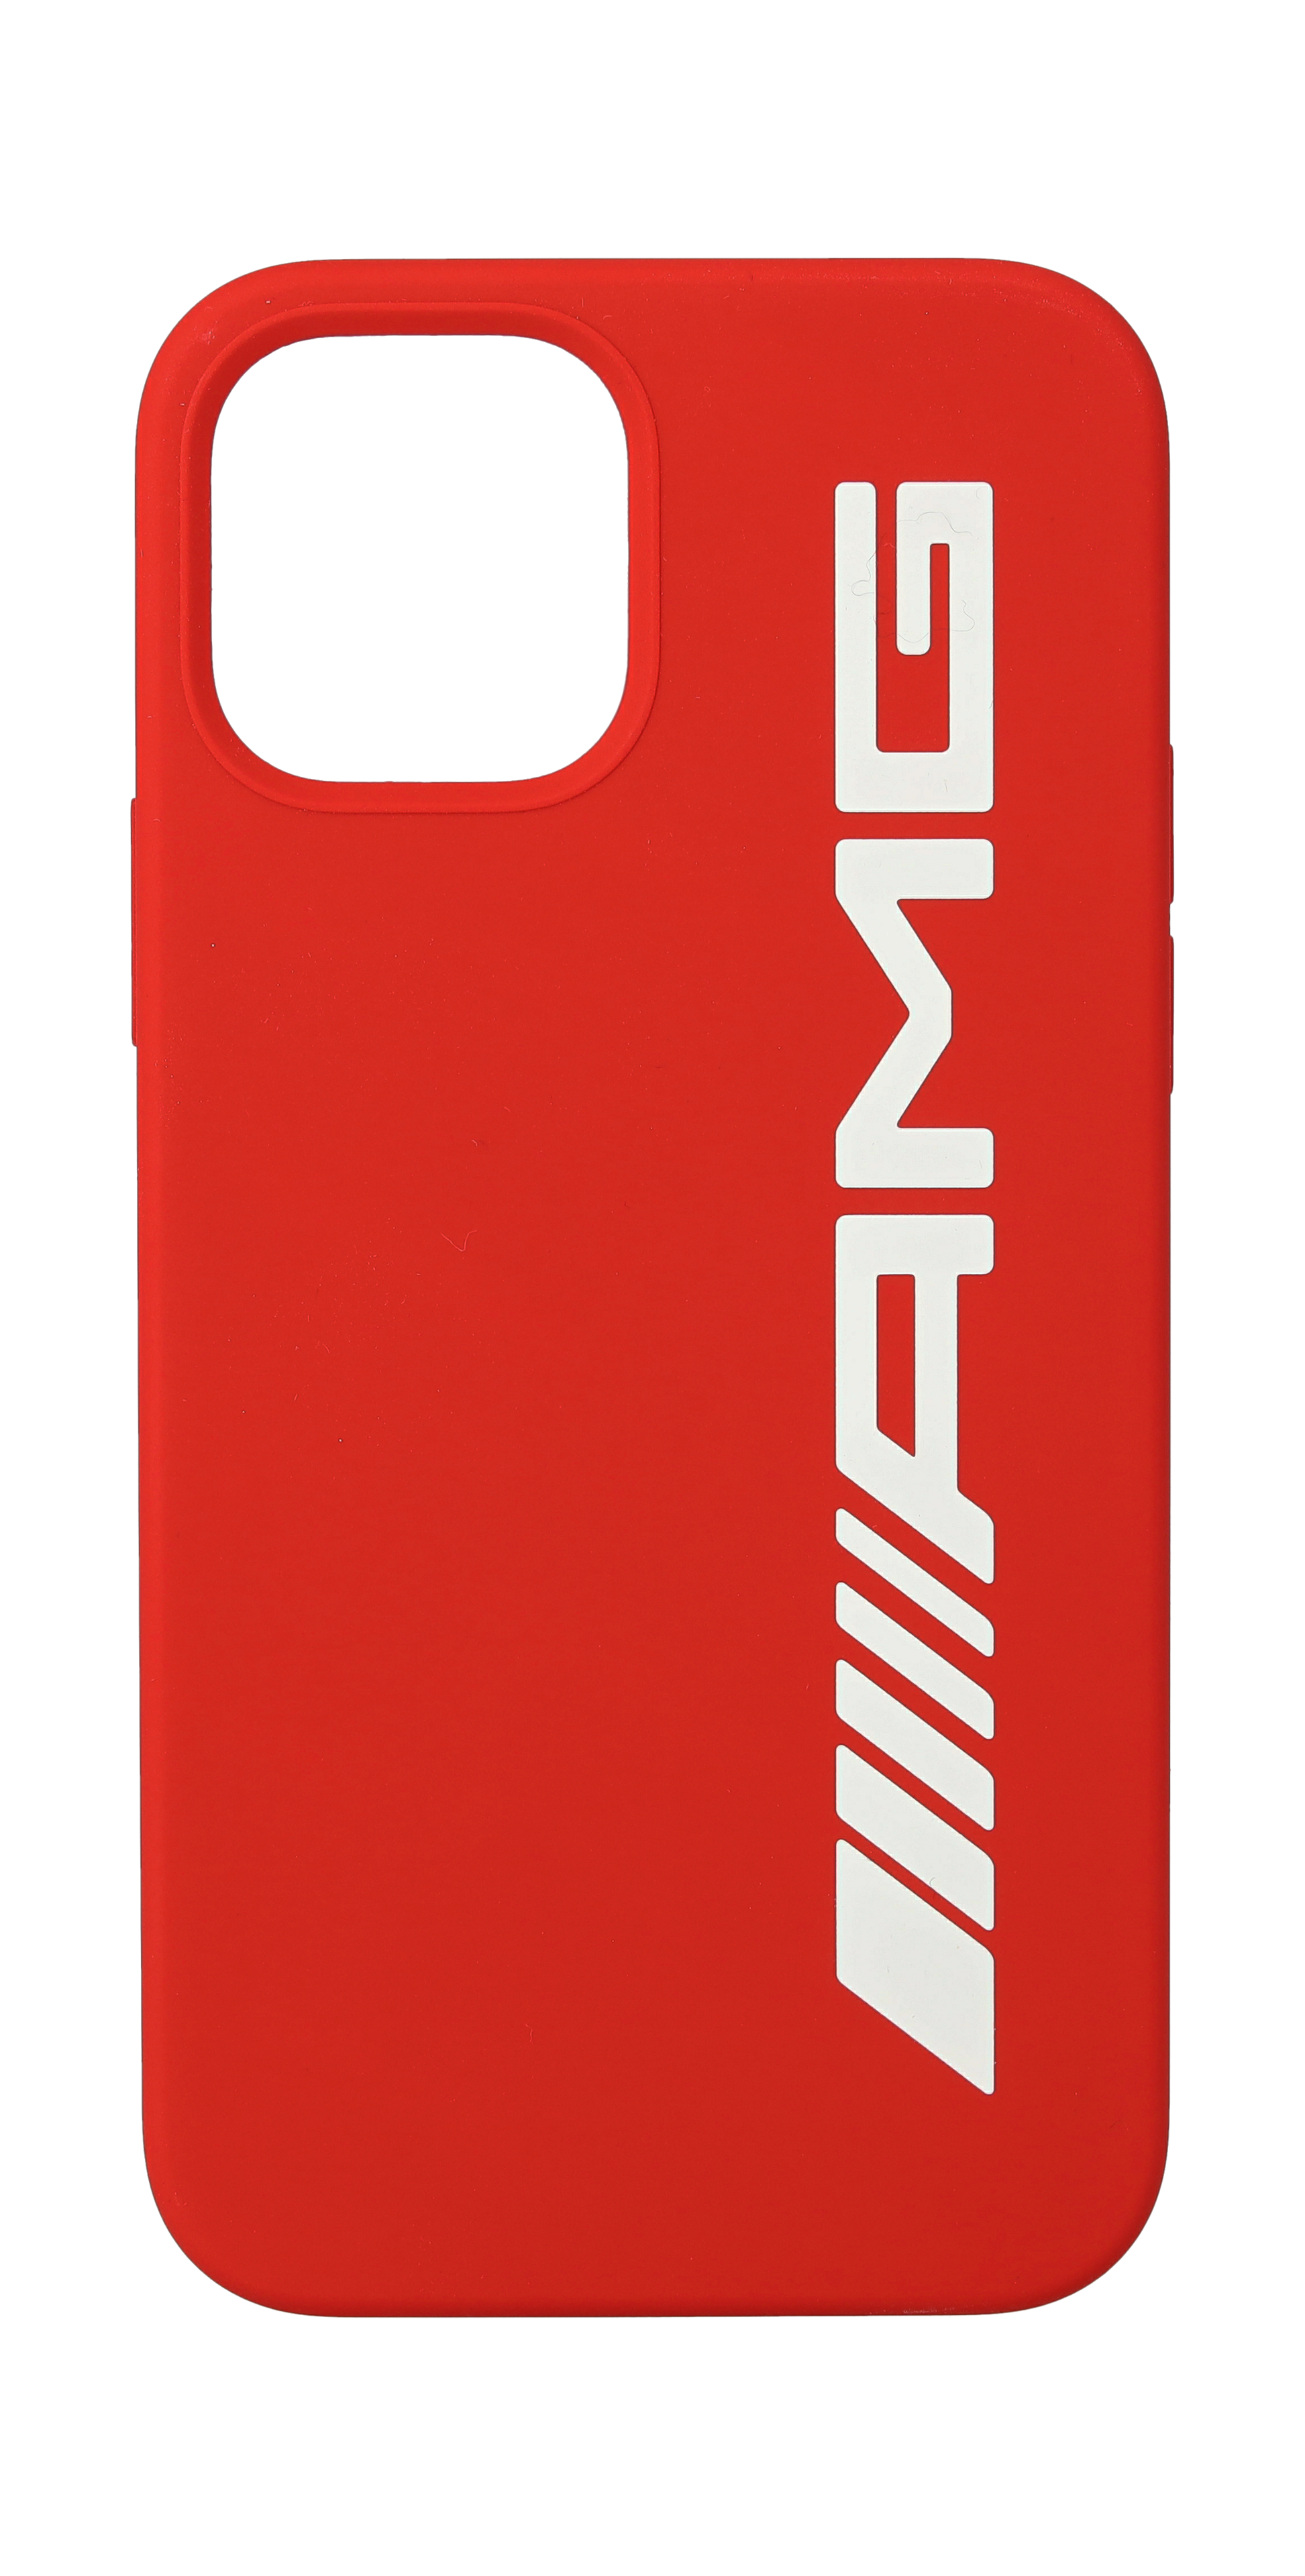 AMG Hülle für iPhone® 12 Pro/iPhone® 12 - rot / weiß, Polycarbonat / Silikon / Mikrofaser